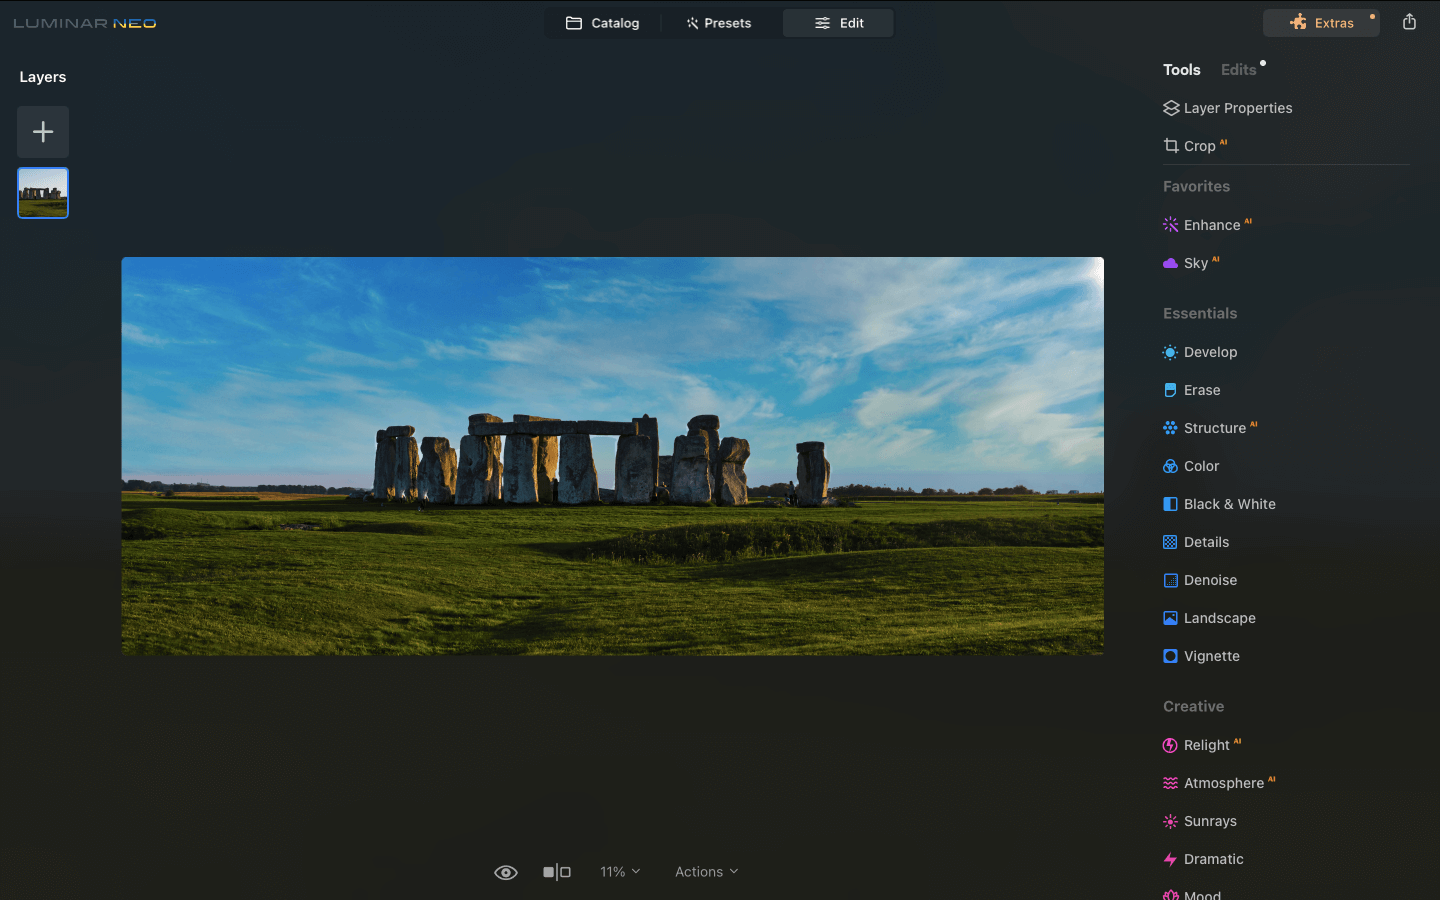 Stonehenge Panorama by RGWords After Editing using Luminar Neo's Panorama Stitching